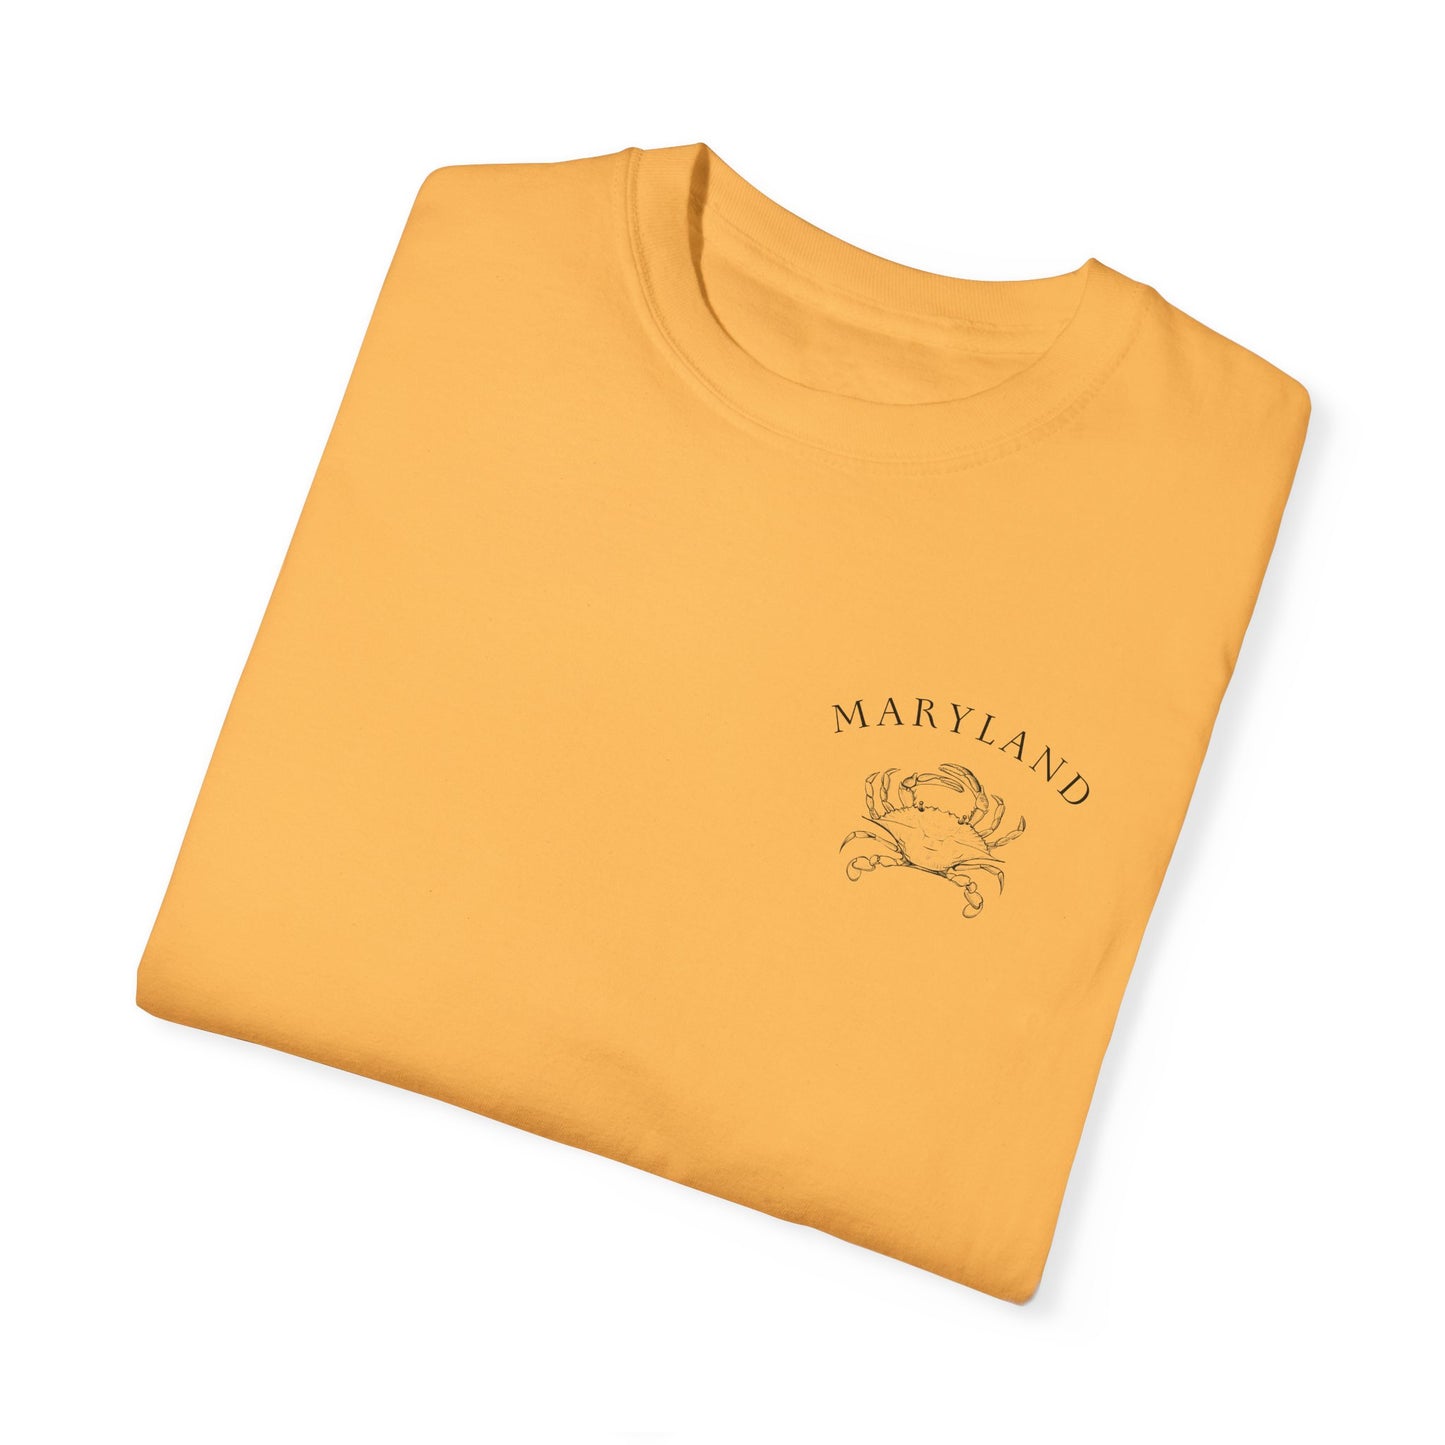 Maryland Pocket T-shirt